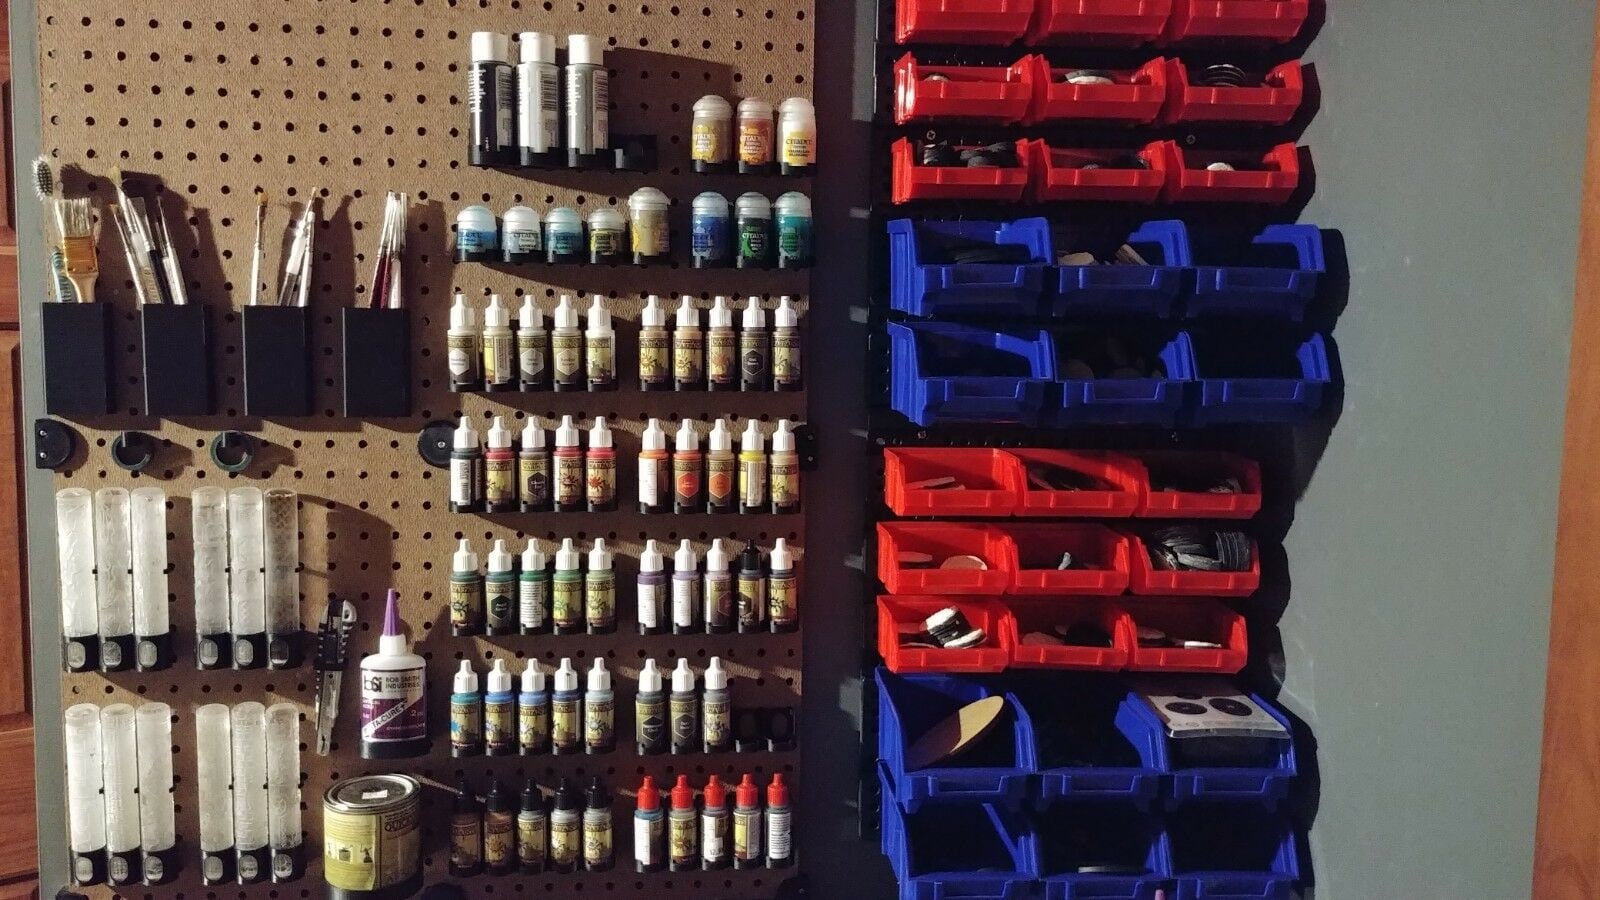  Games Workshop Citadel Paint Rack : Arts, Crafts & Sewing